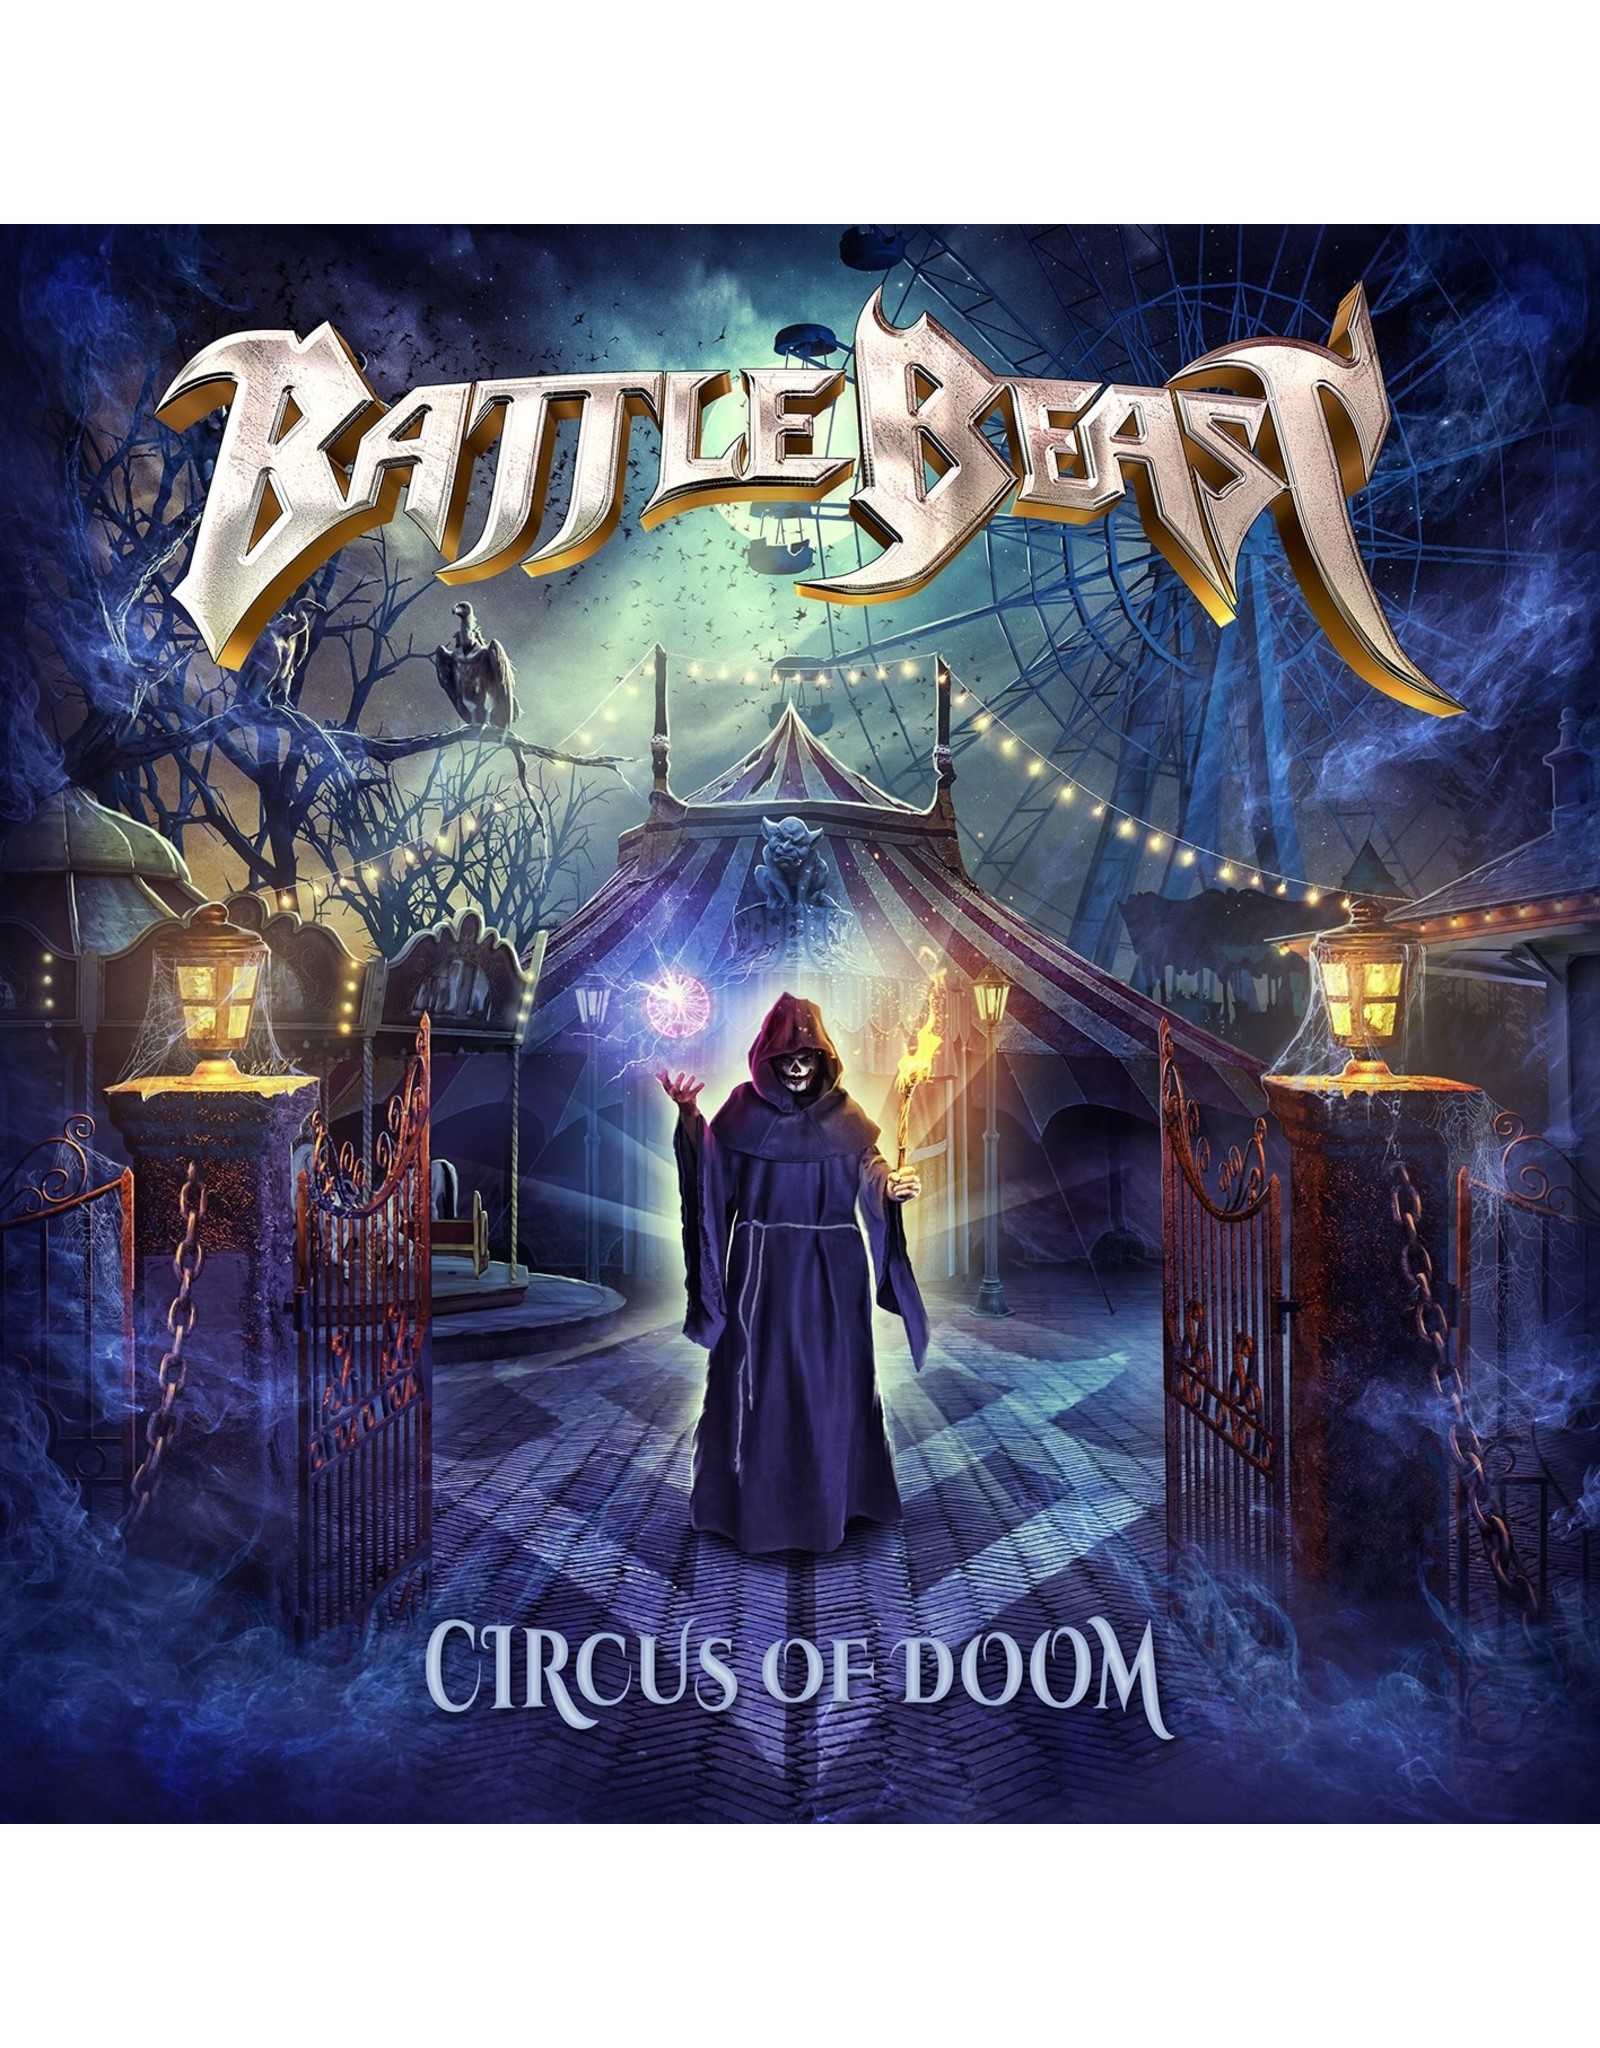 Battle Beast - Circus Of Doom (2LP-transparent red & black marble)